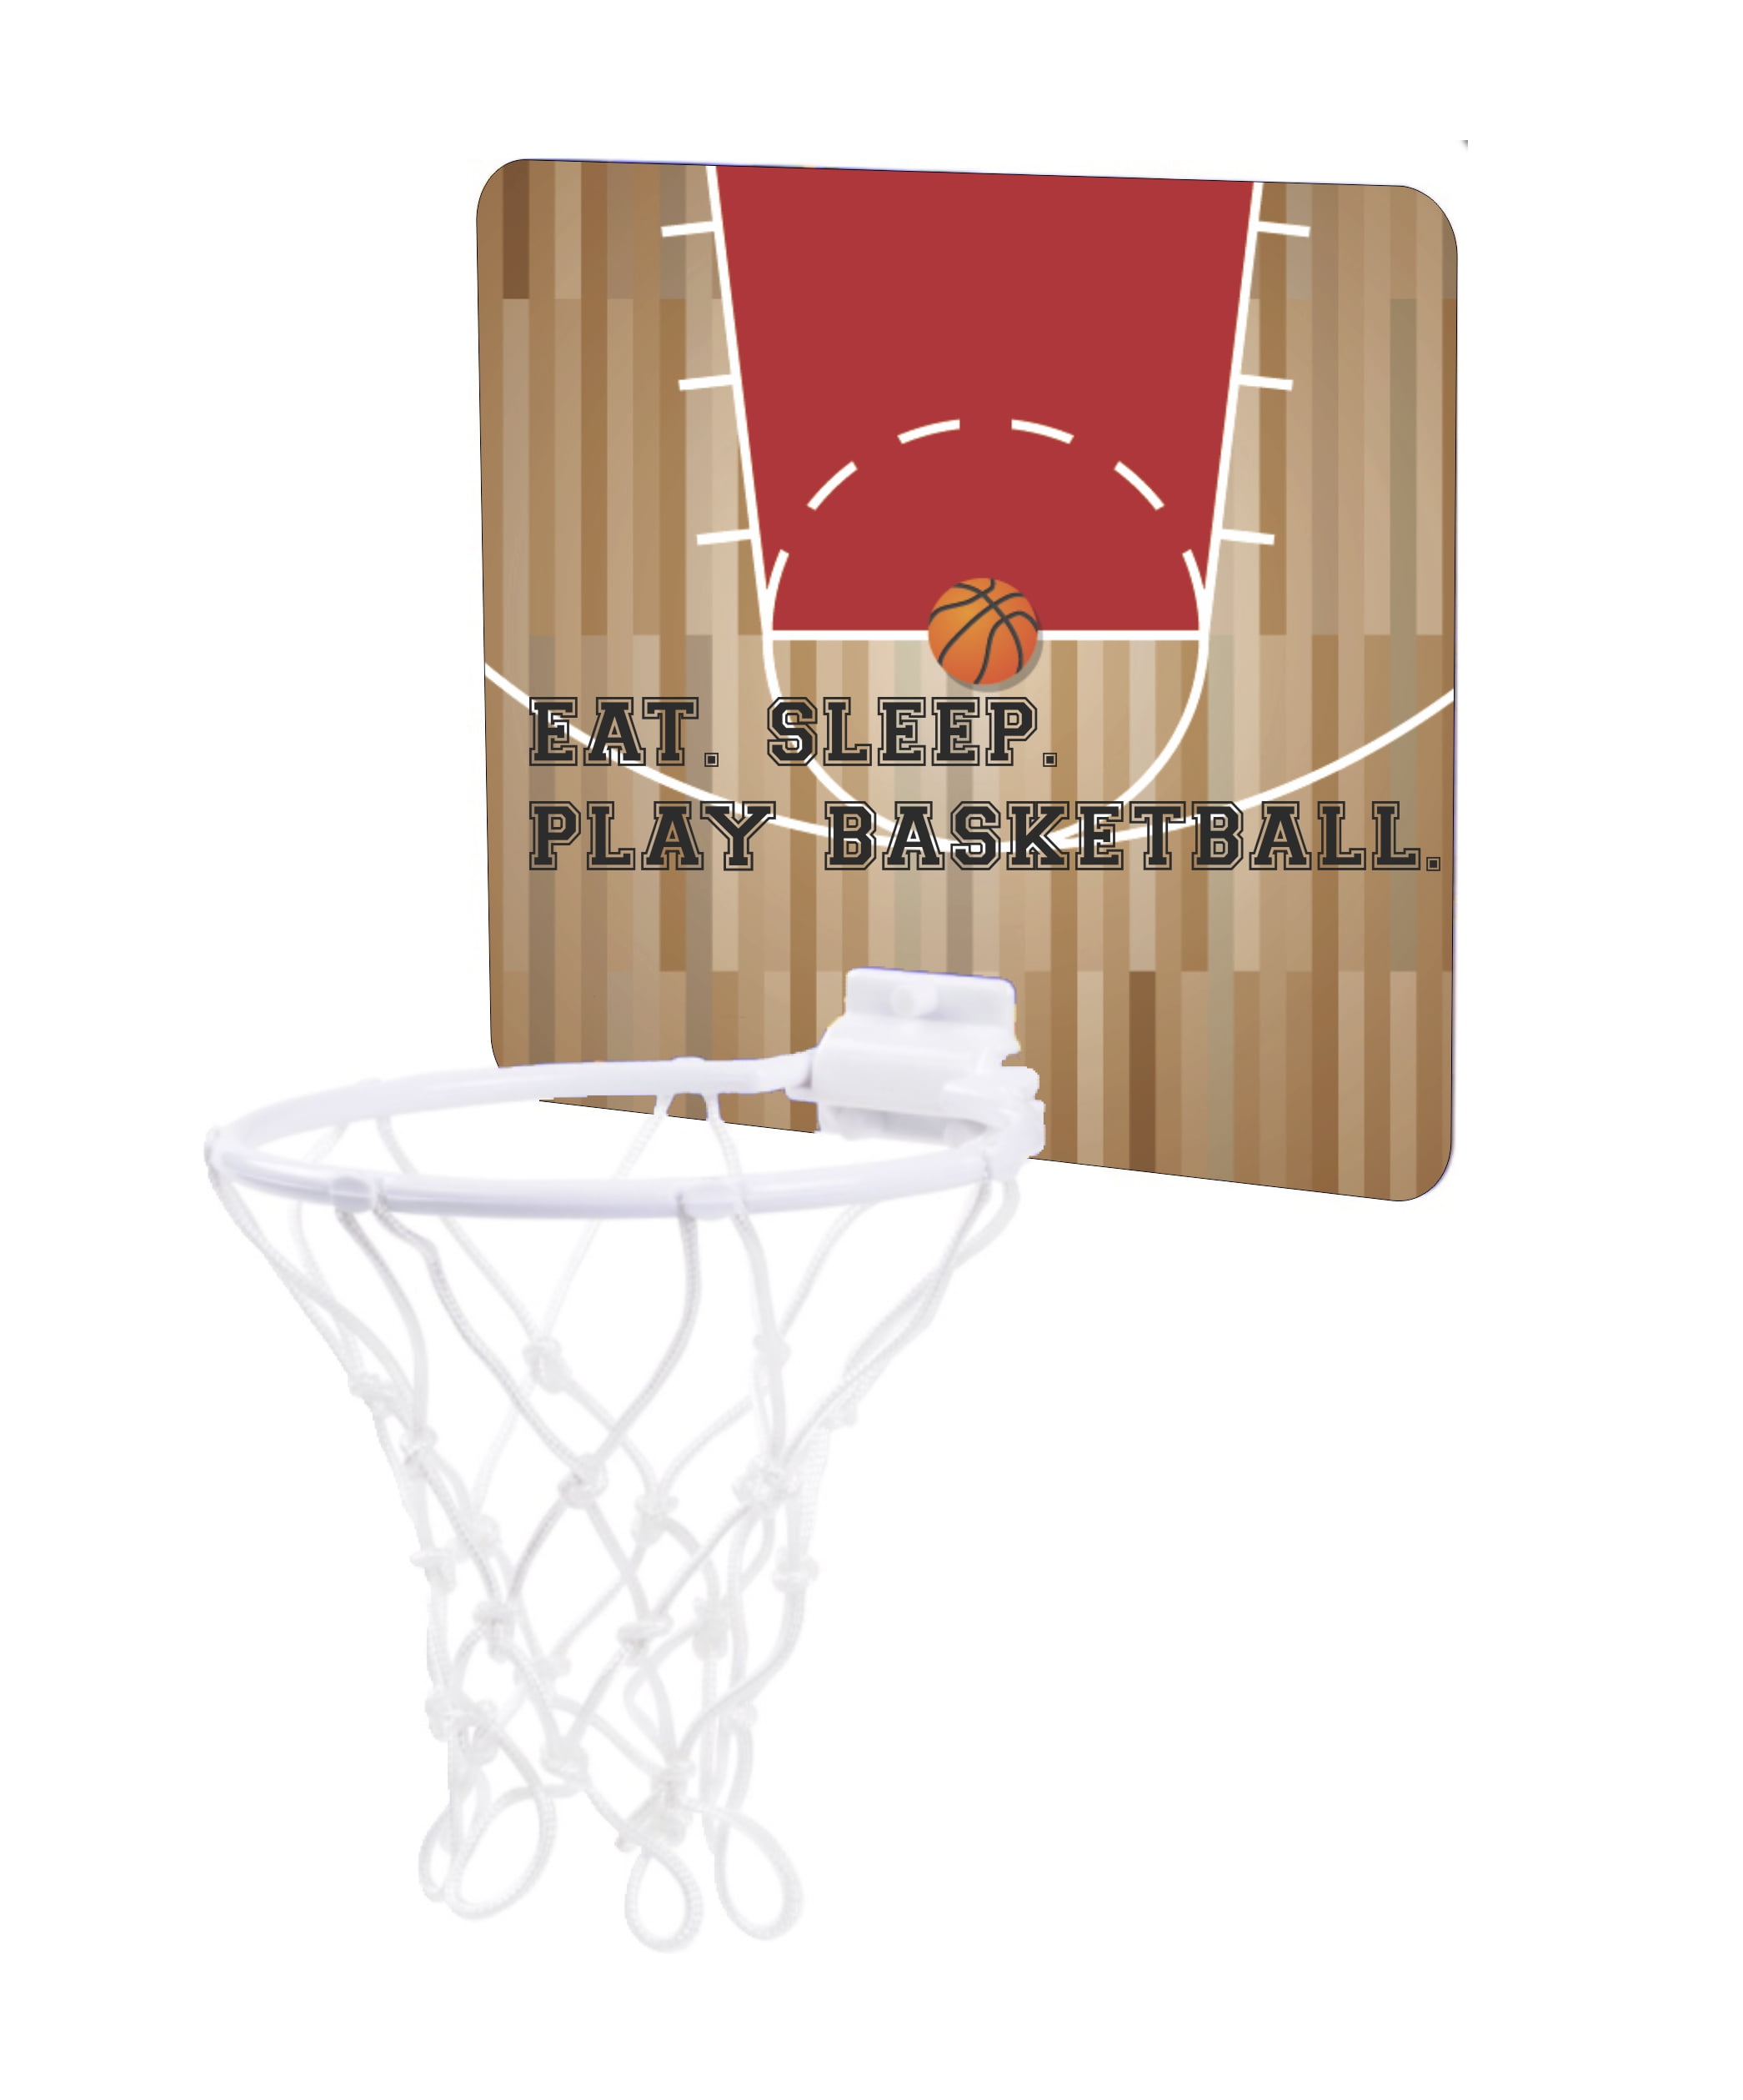 Basketball Court Design - Eat. Sleep. Play Basketball. Unisex Childrens 7.5&quot; x 9&quot; Mini Basketball Backboard - Goal with 6&quot; Hoop